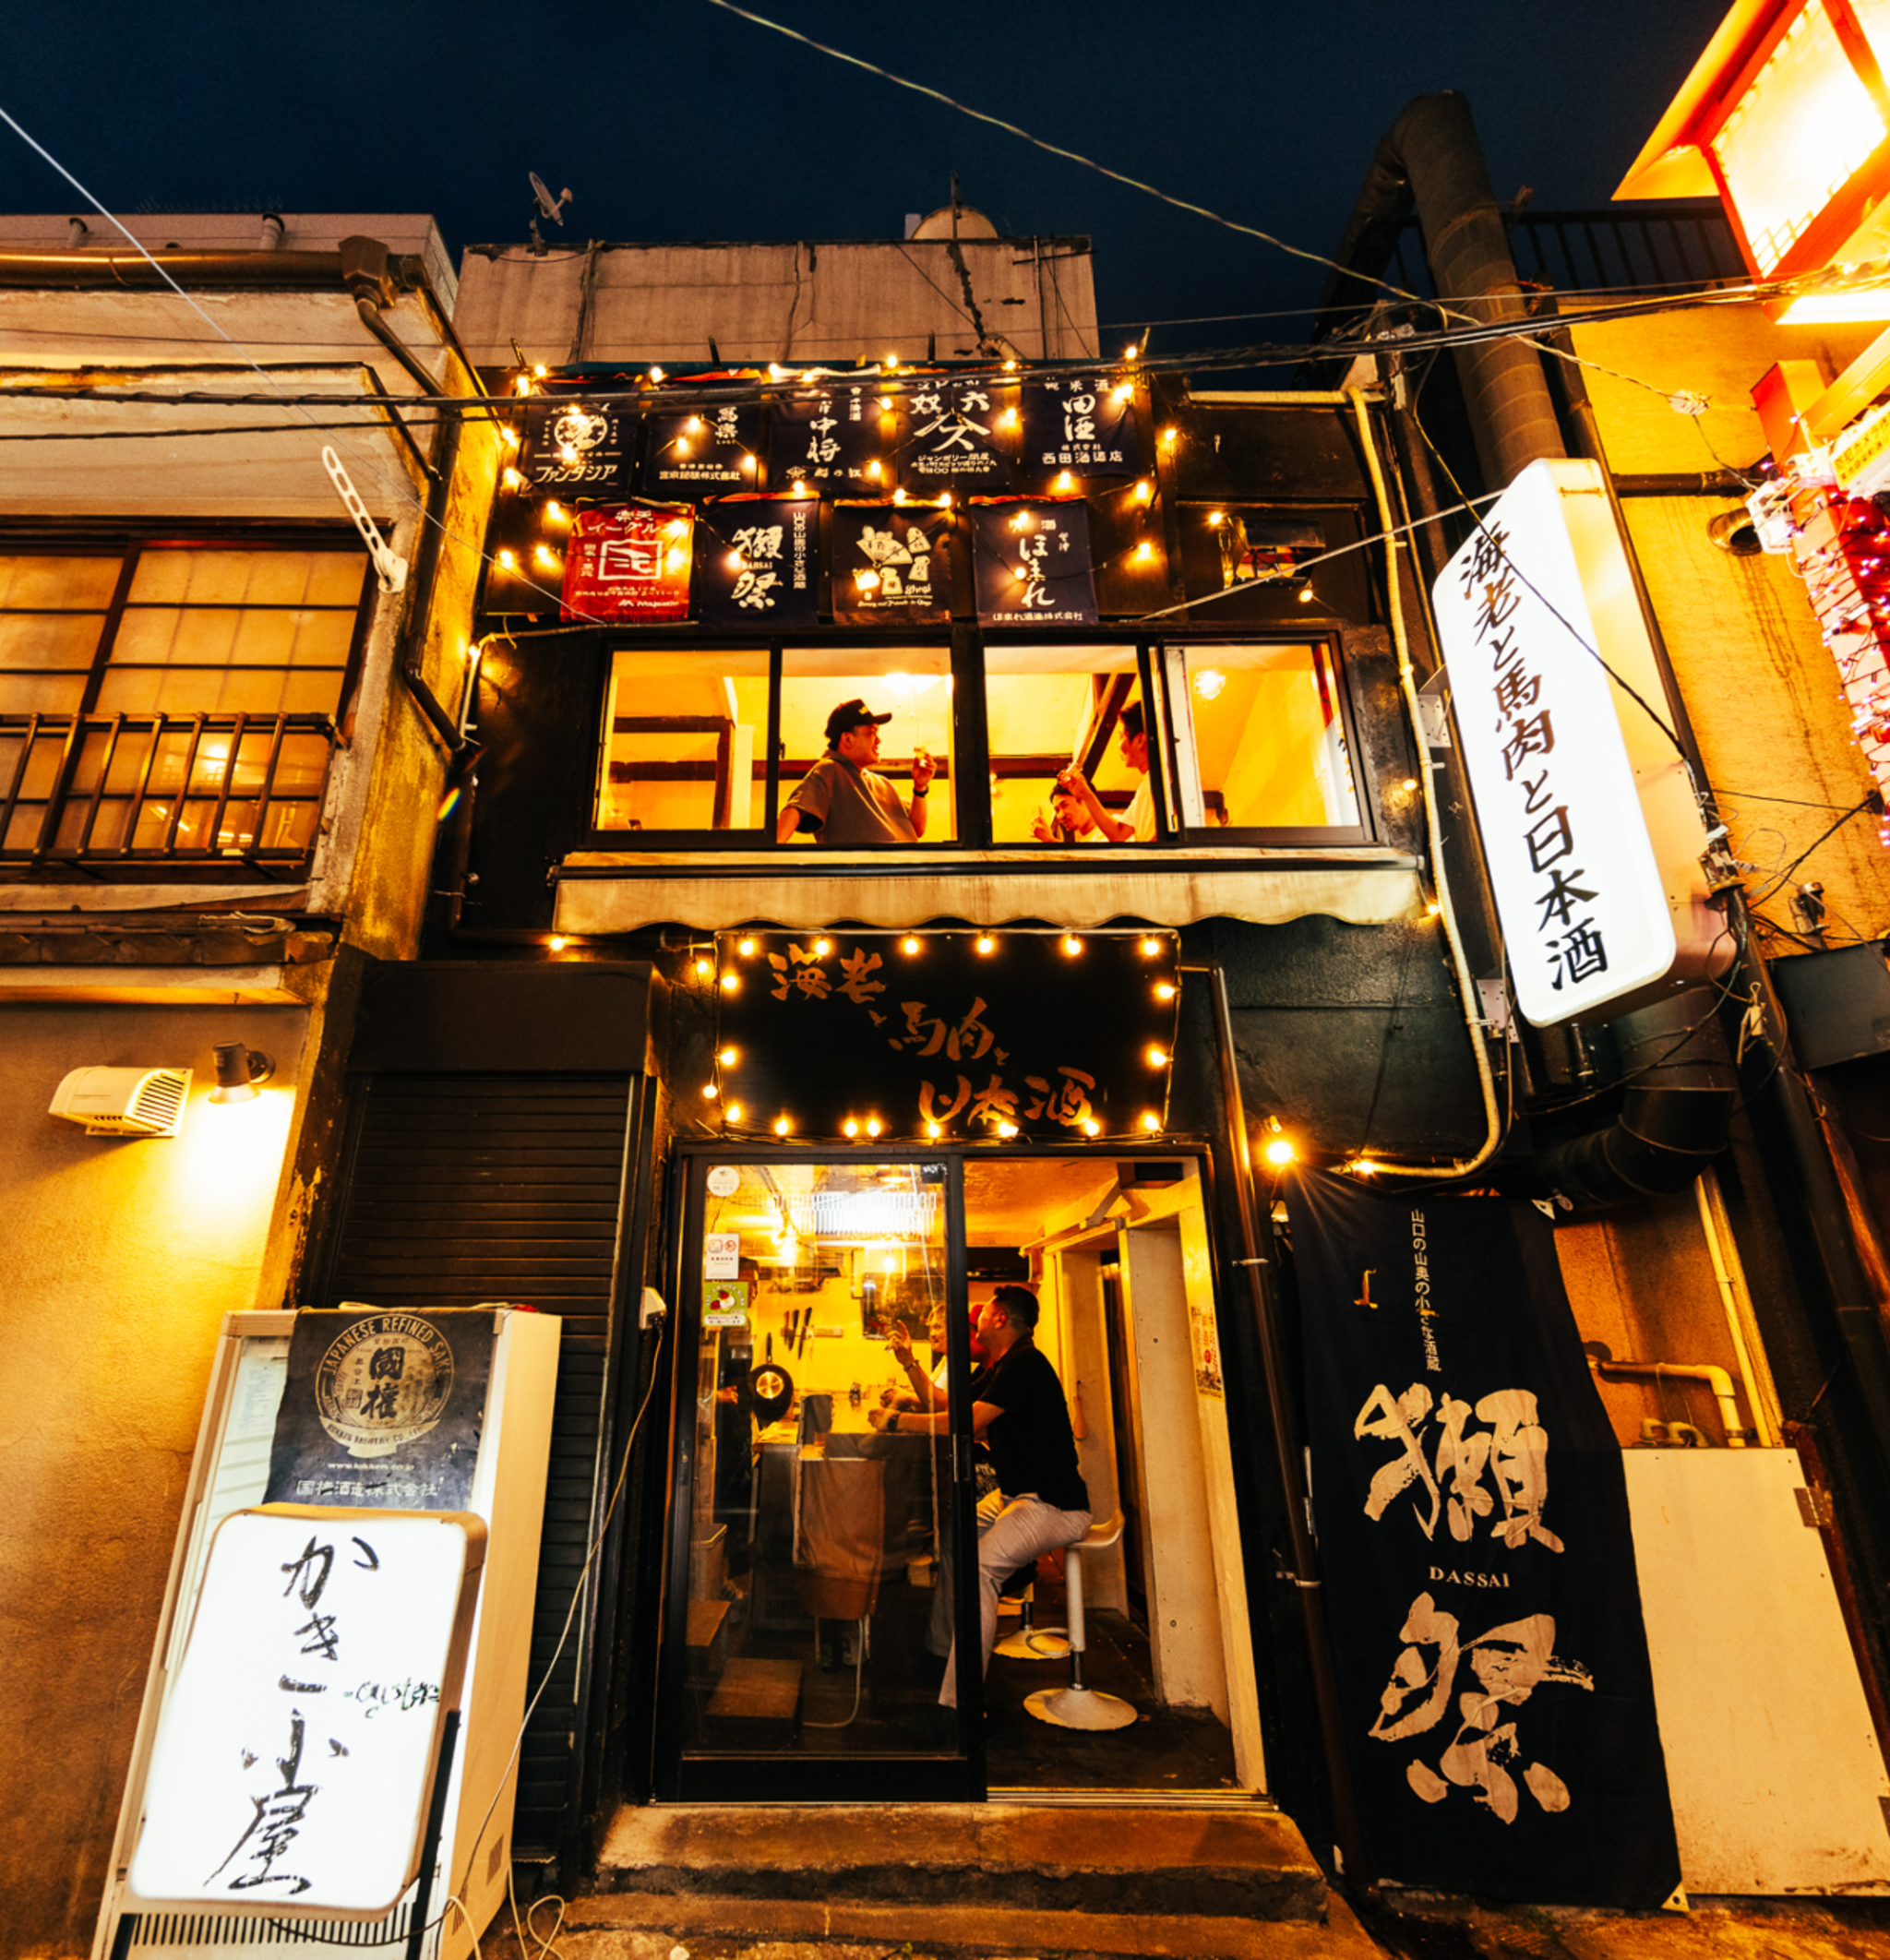 海老と馬肉と日本酒の居酒屋 池袋栄町横町店の代表写真8